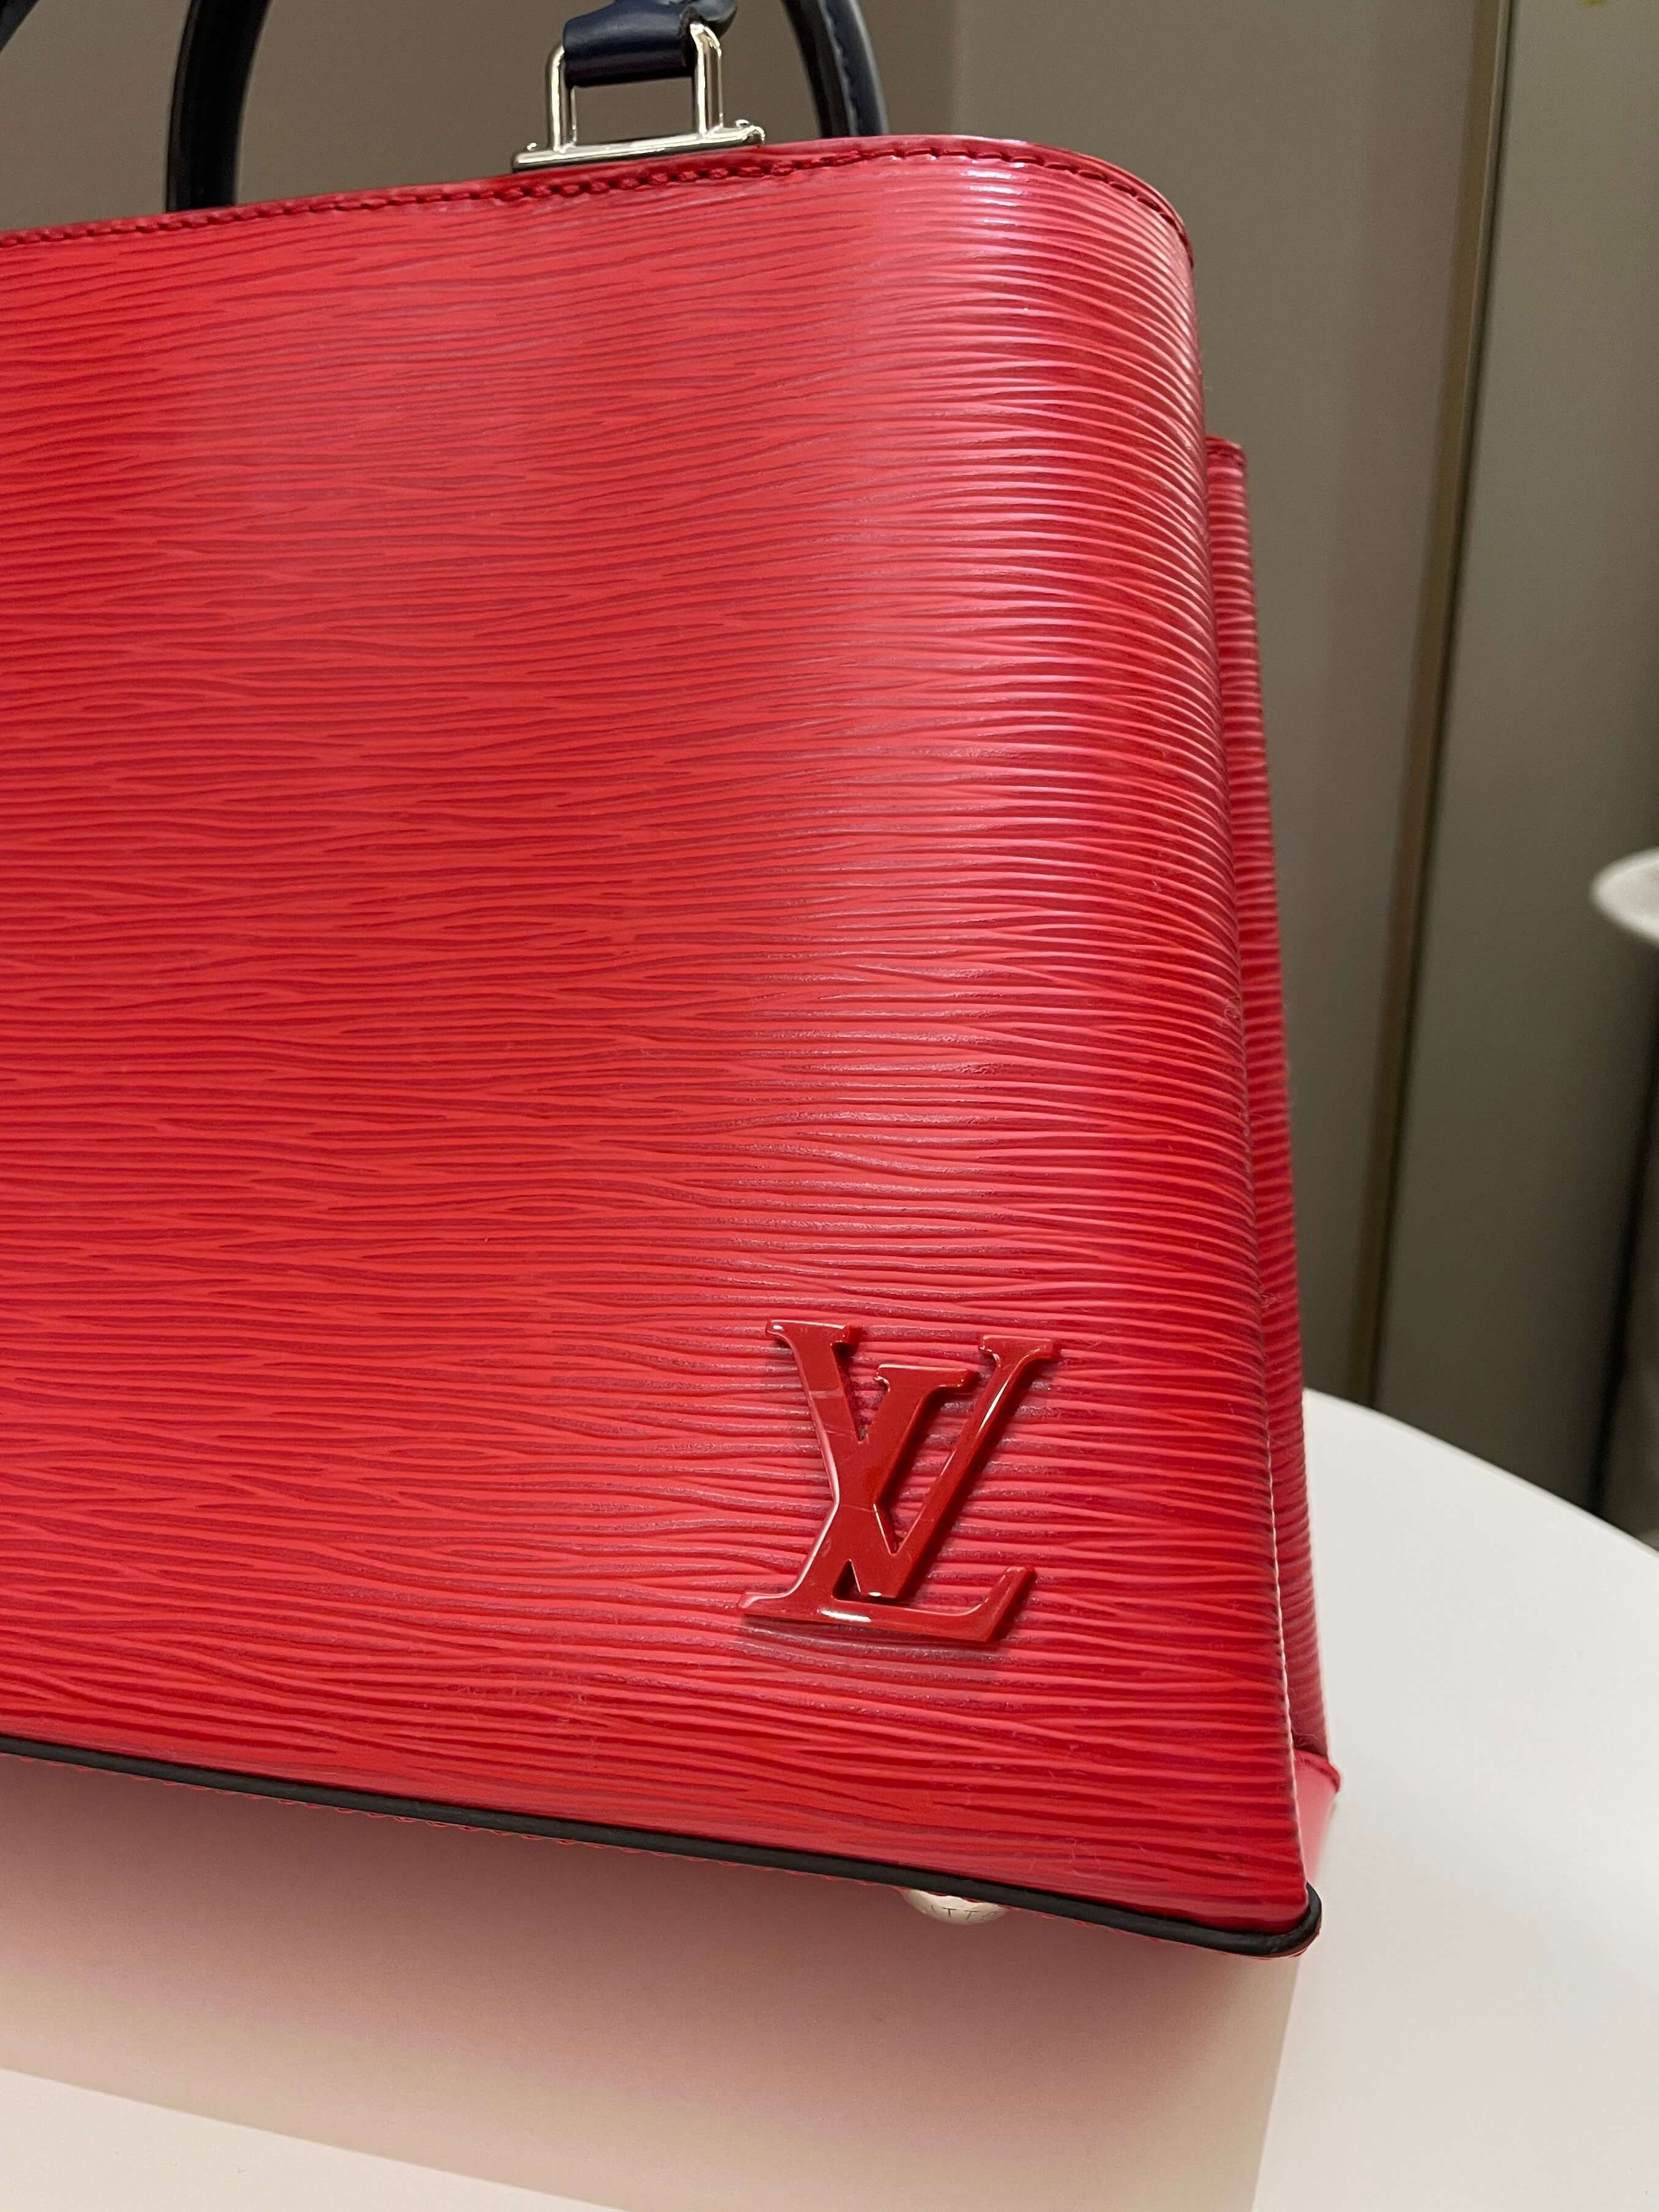 Louis Vuitton Epi Kleber PM Andigo Coquelicot 2Way Shoulder Bag Handbag blue